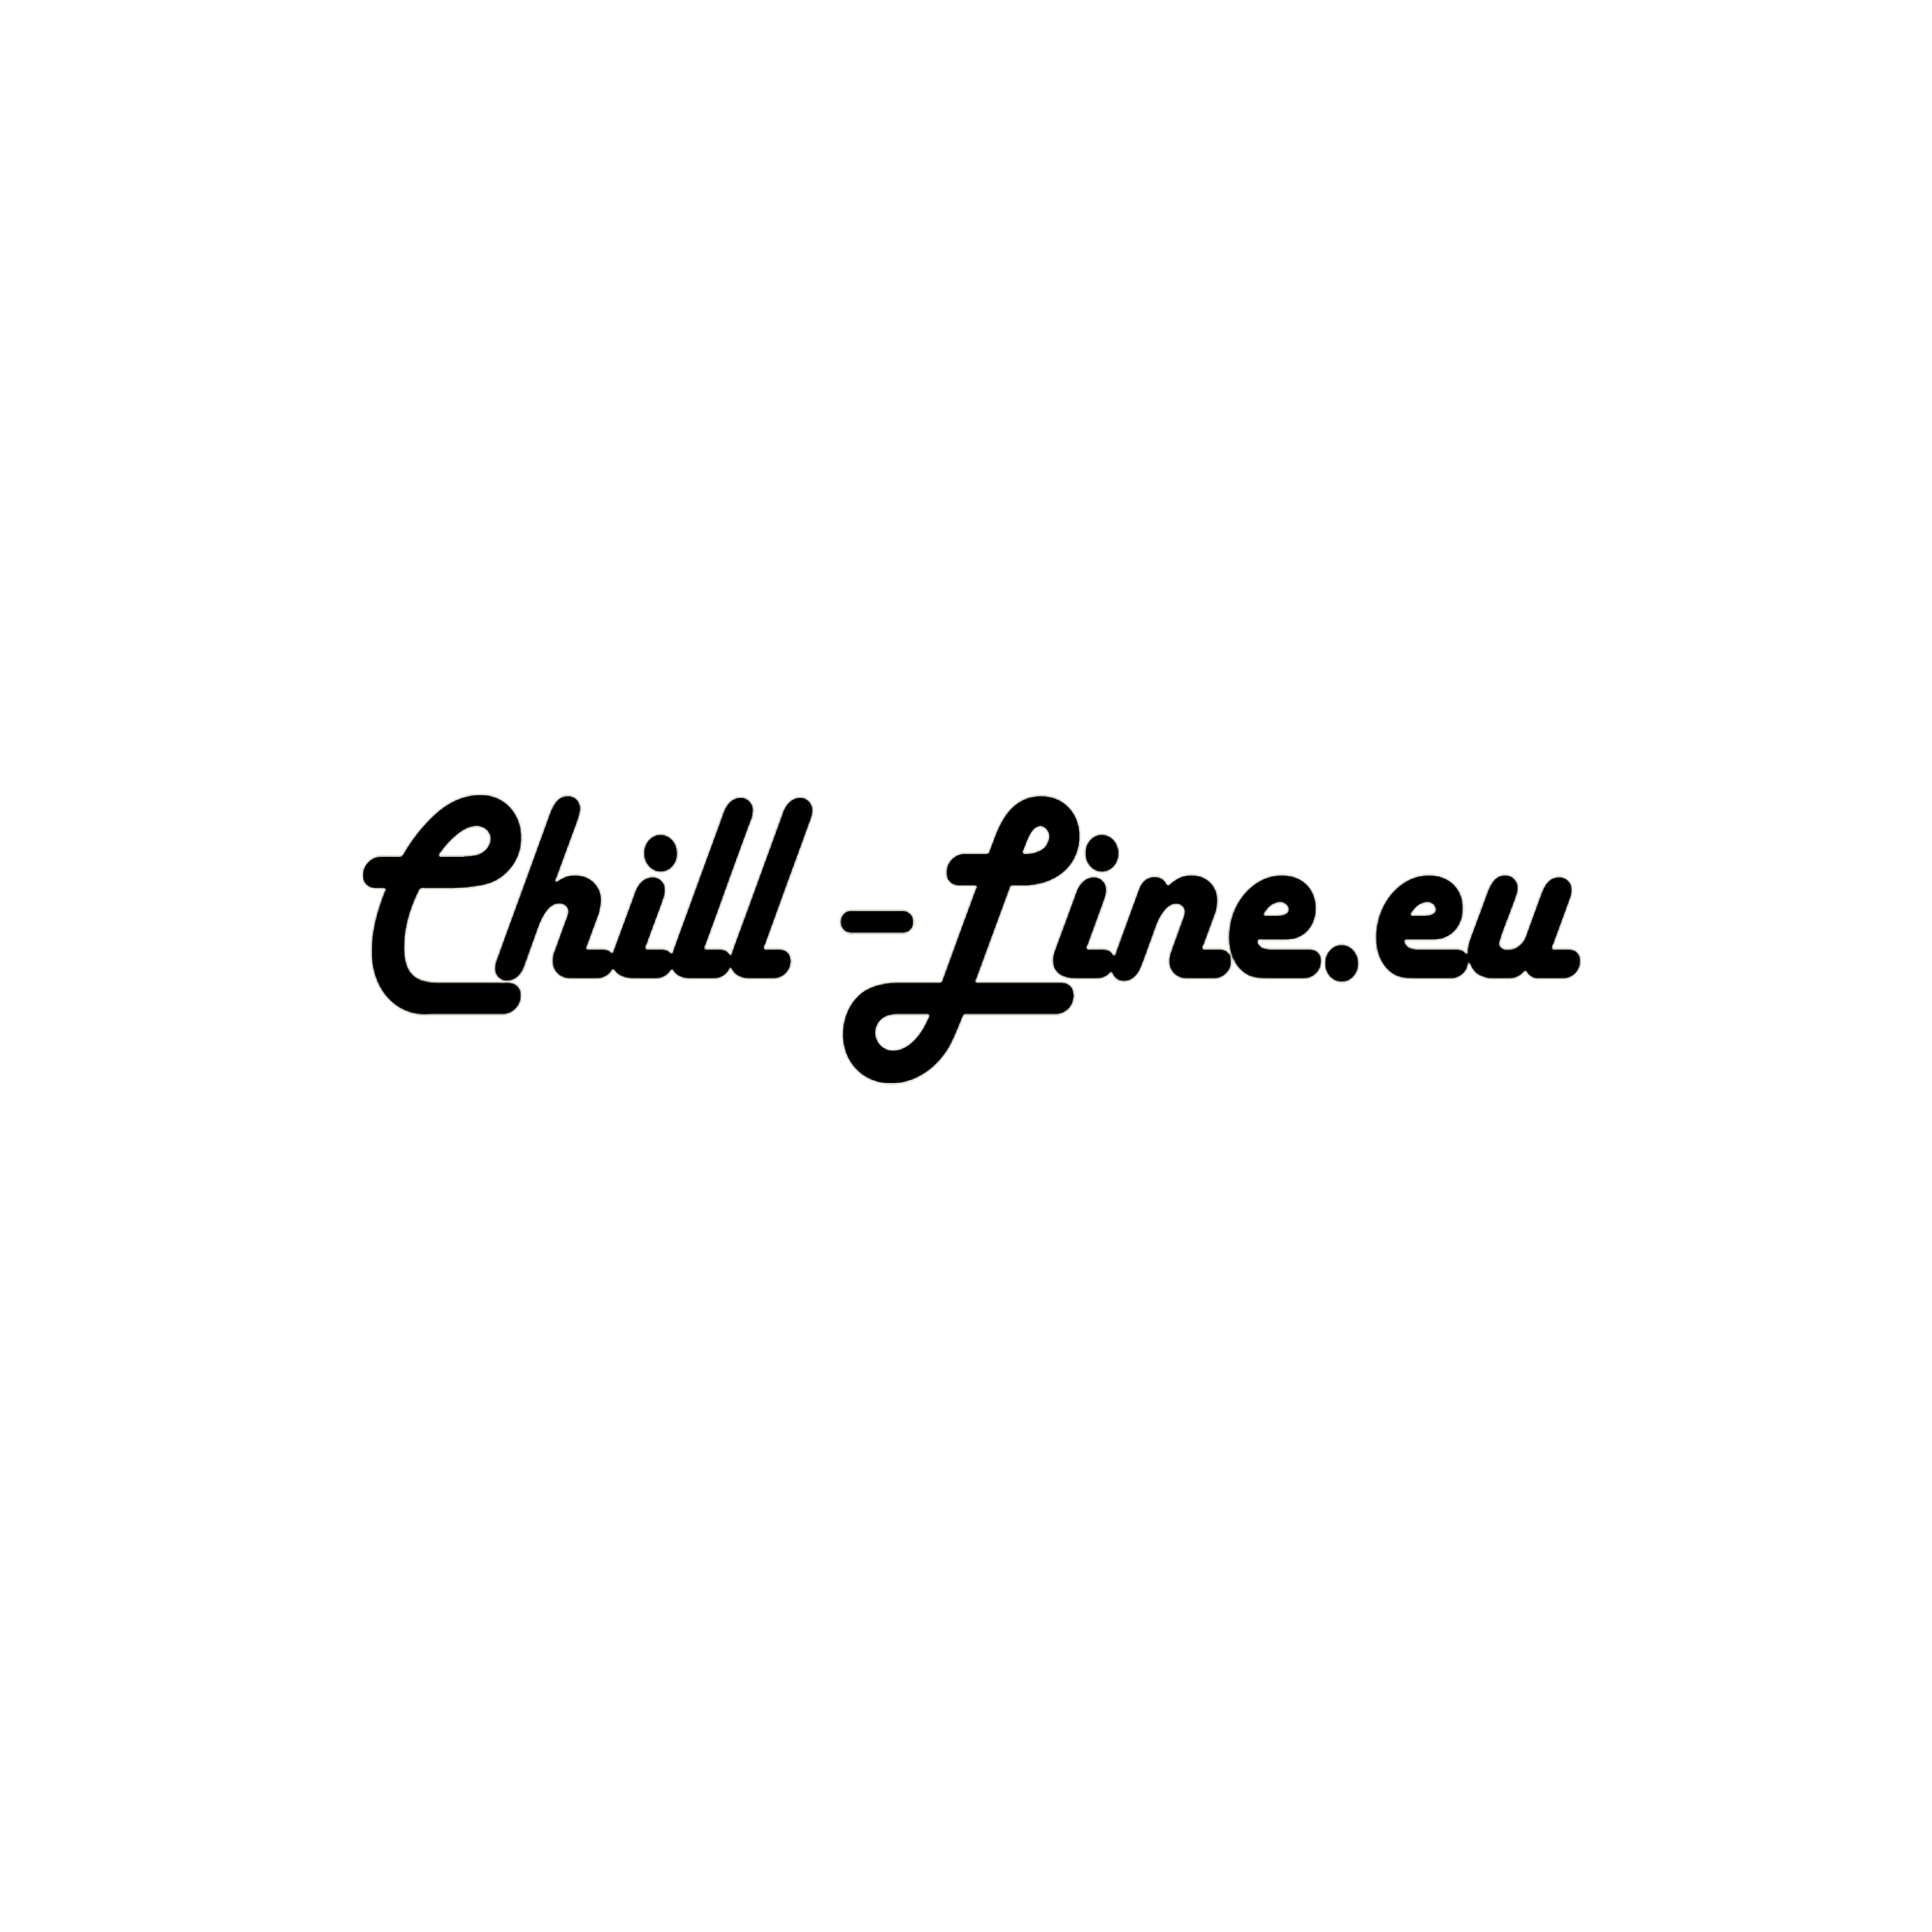 Chill line